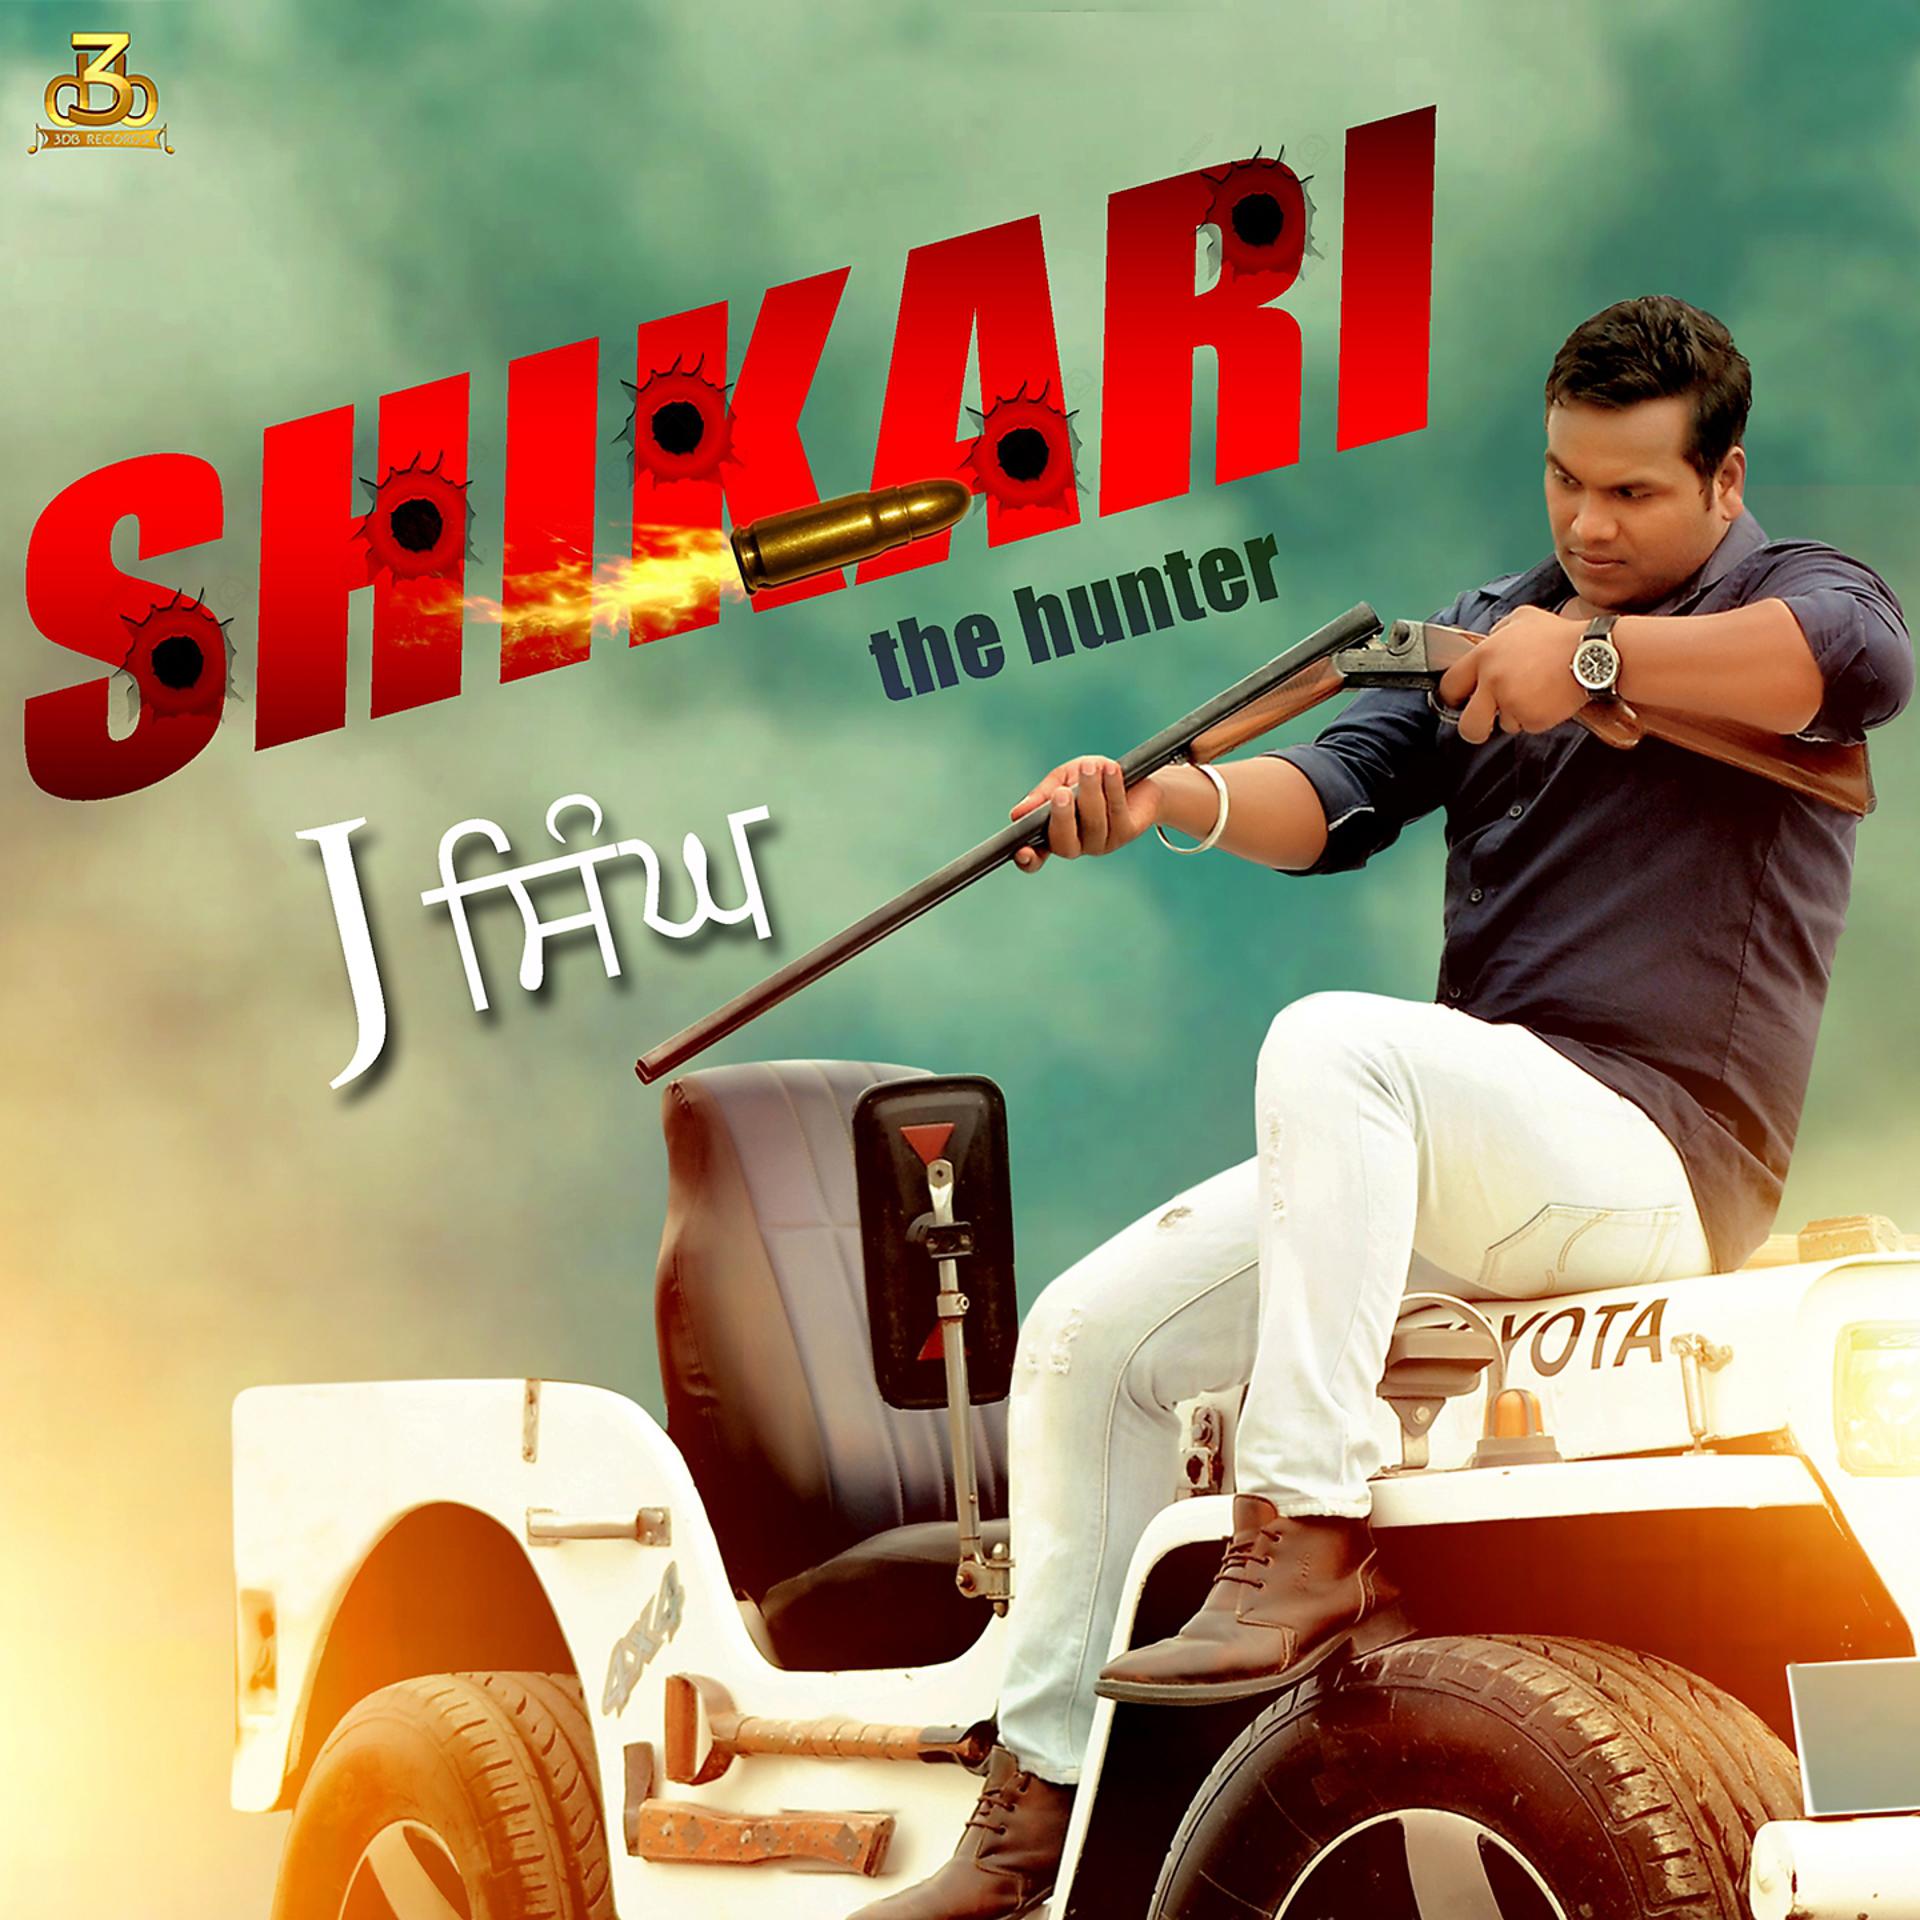 Постер альбома Shikari